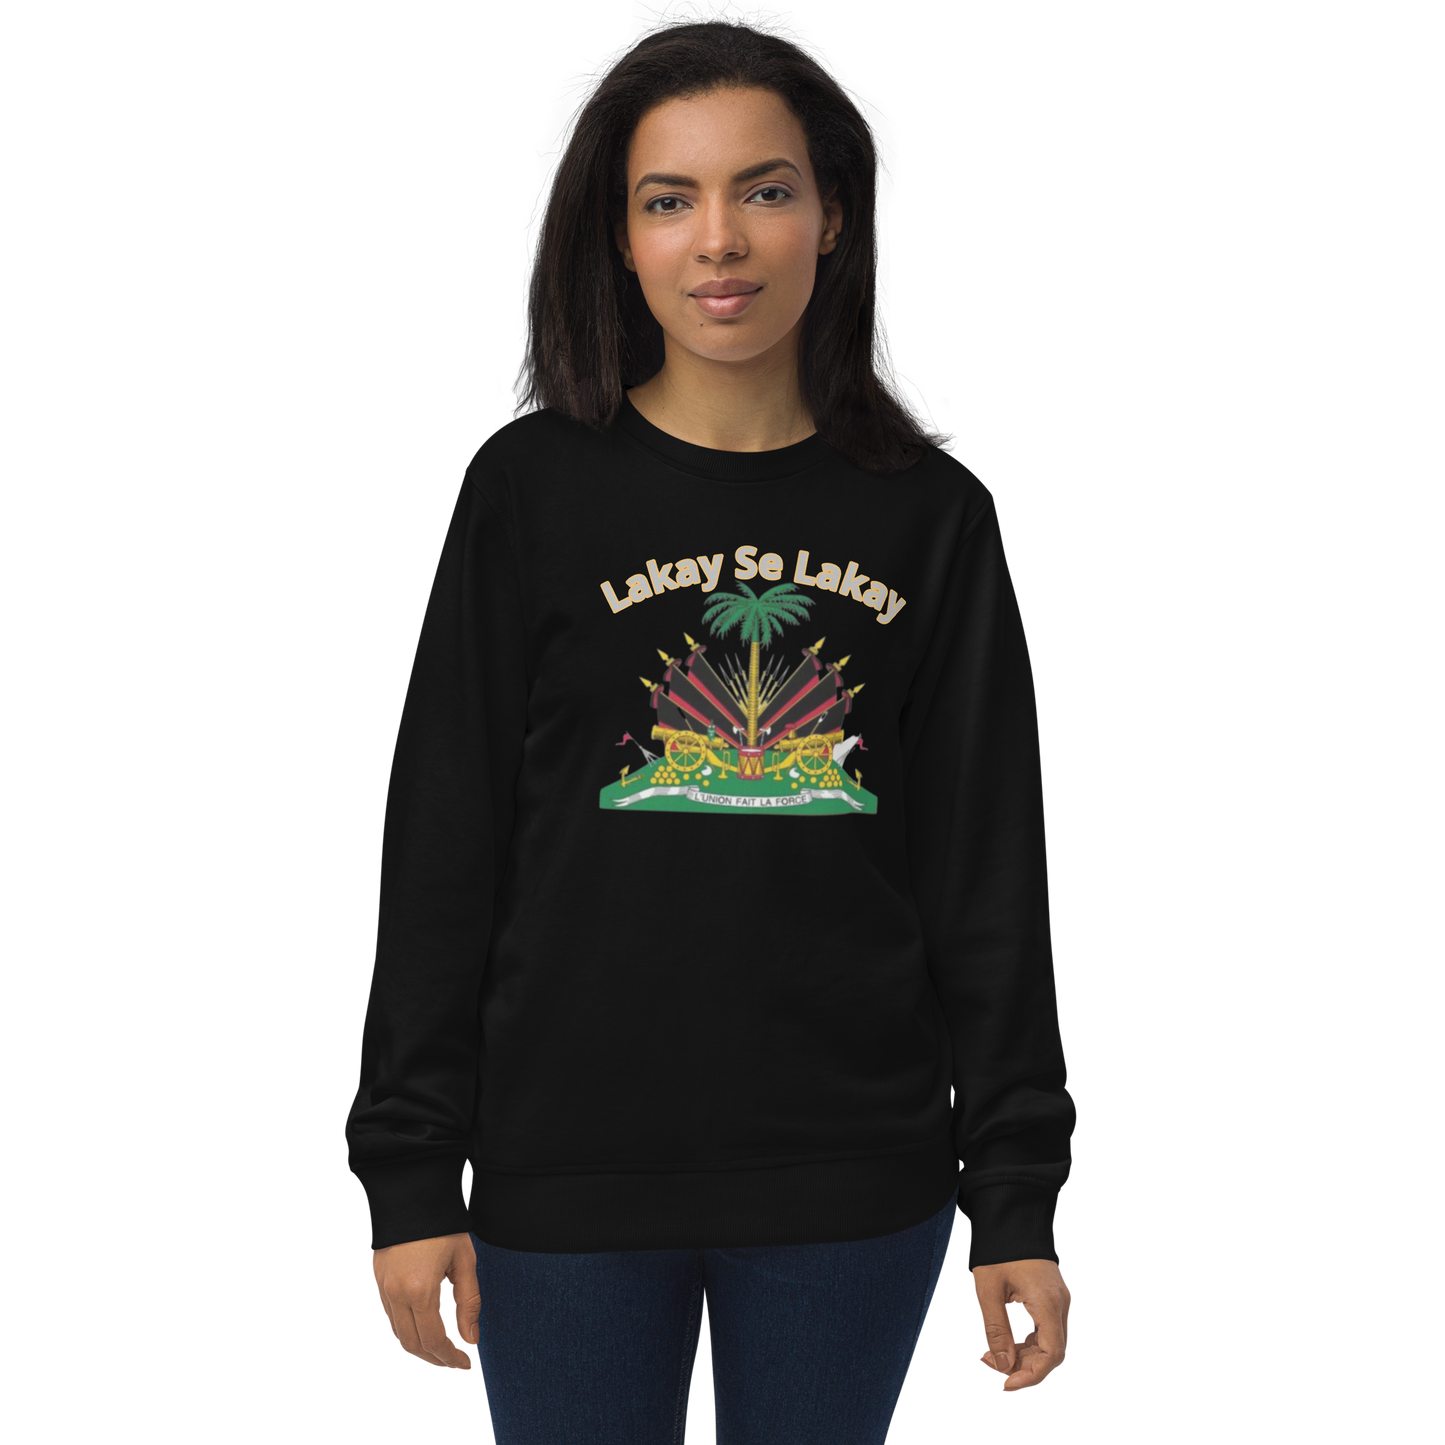 Island rich Unisex organic sweatshirt